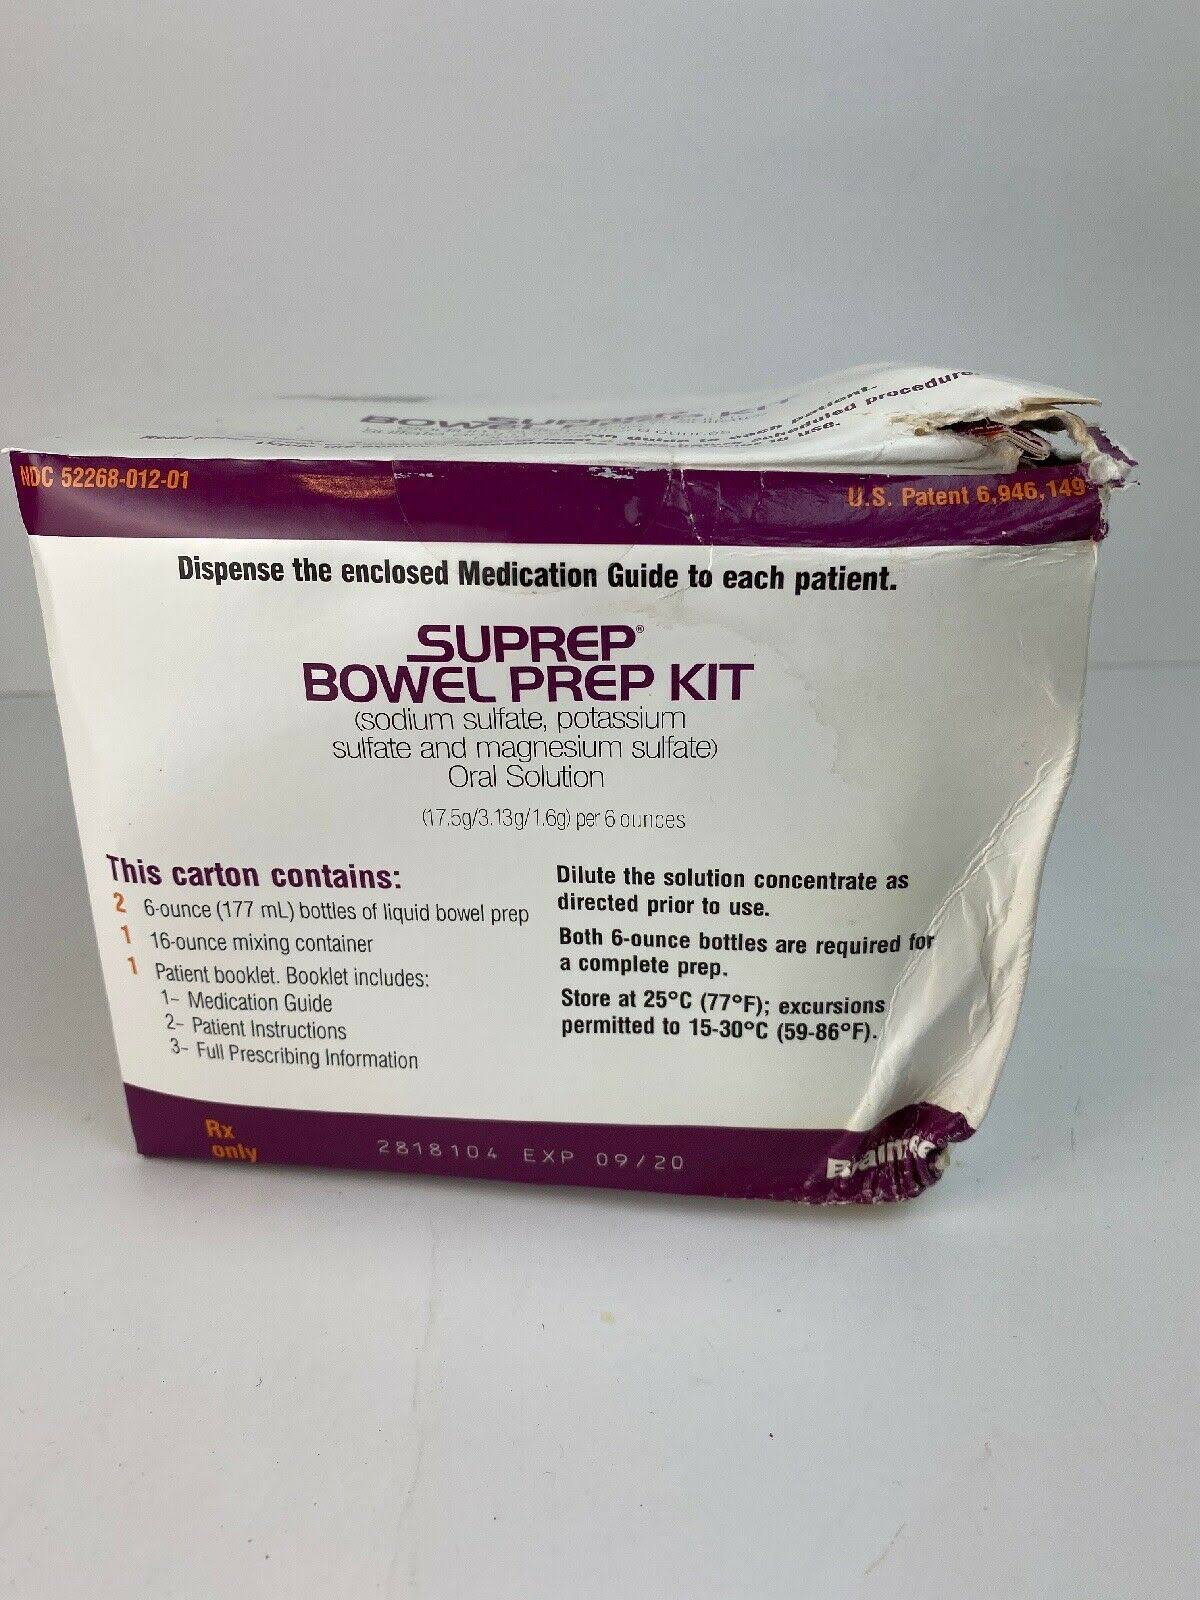 Suprep Bowel Prep Kit by Braintree Factory Sealed EXP 9/2020 Damaged Box